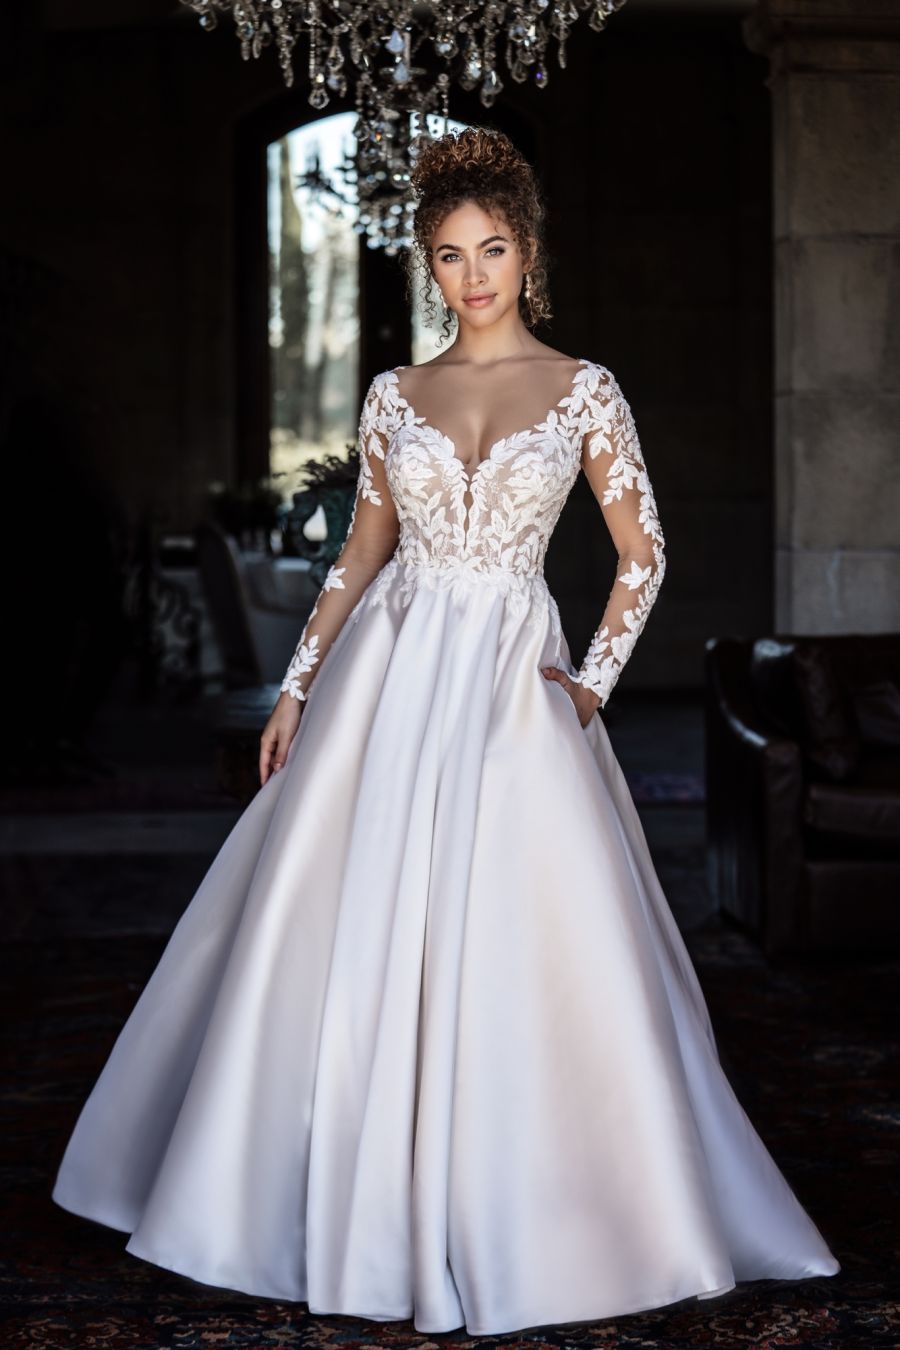 Timeless Full Skirt Wedding Dress - Style #M2451 | Mikaella Bridal